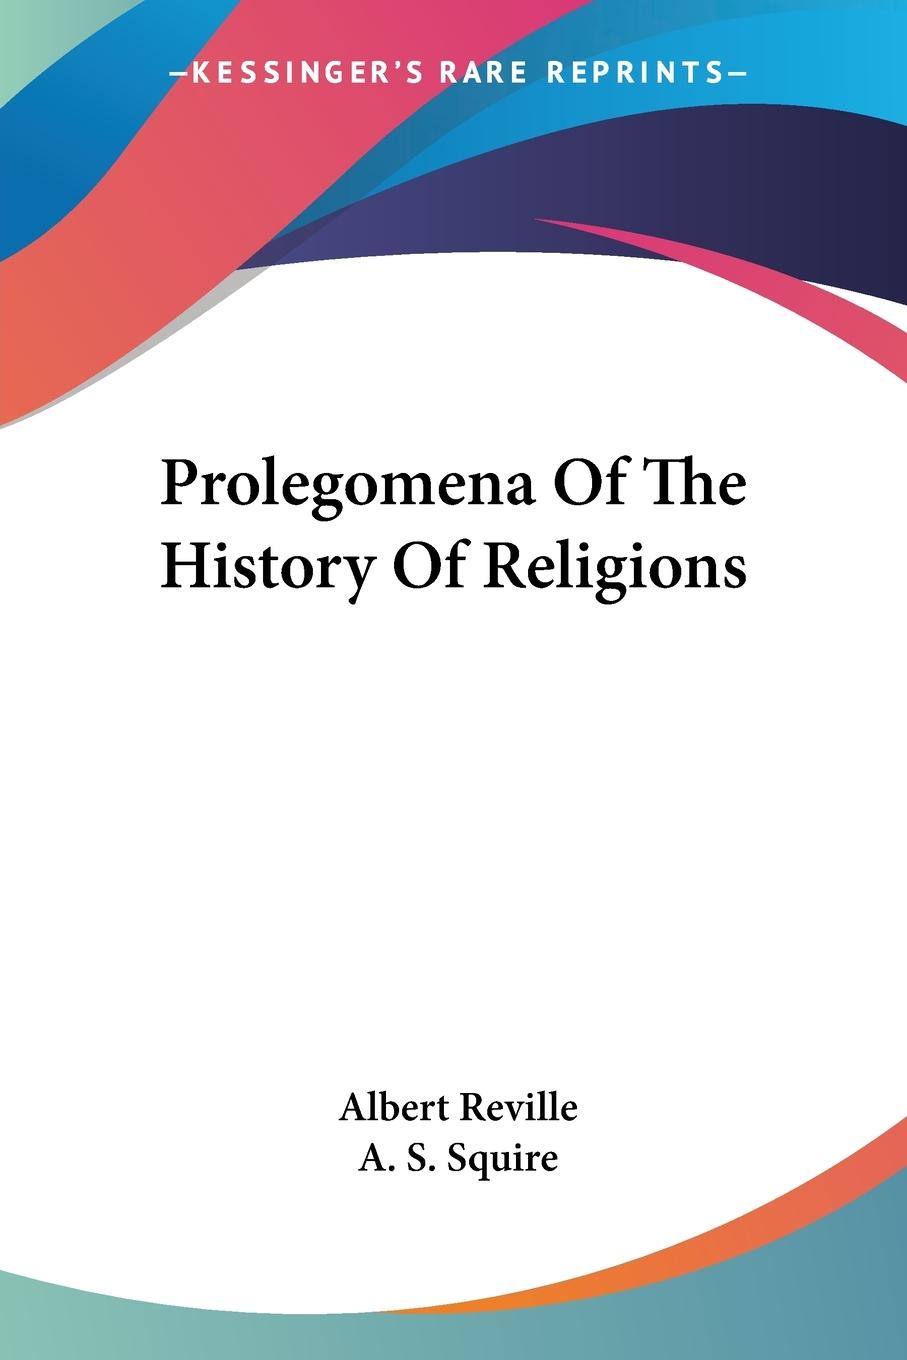 Prolegomena Of The History Of Religions - Reville, Albert